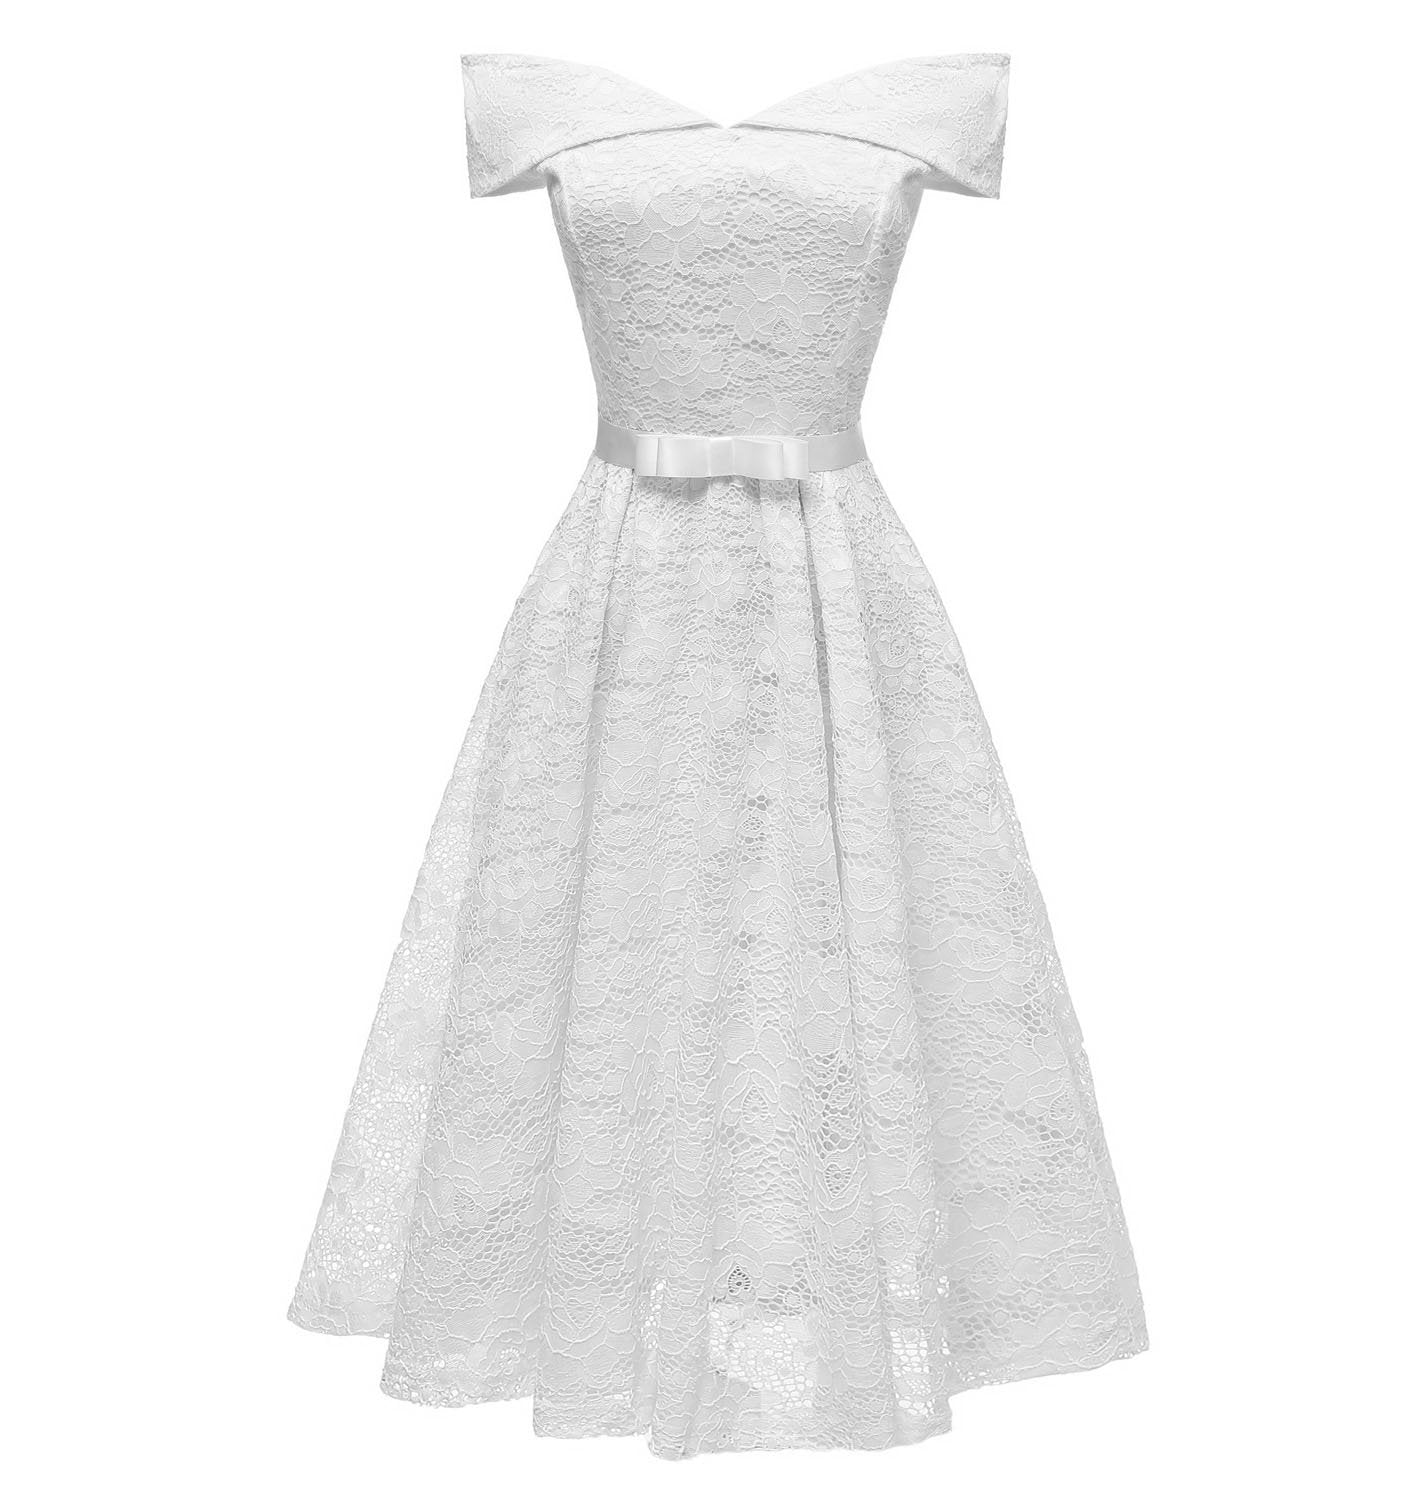 1950s Women's Fashion Vintage Dresses White Off the Shoulder Dress